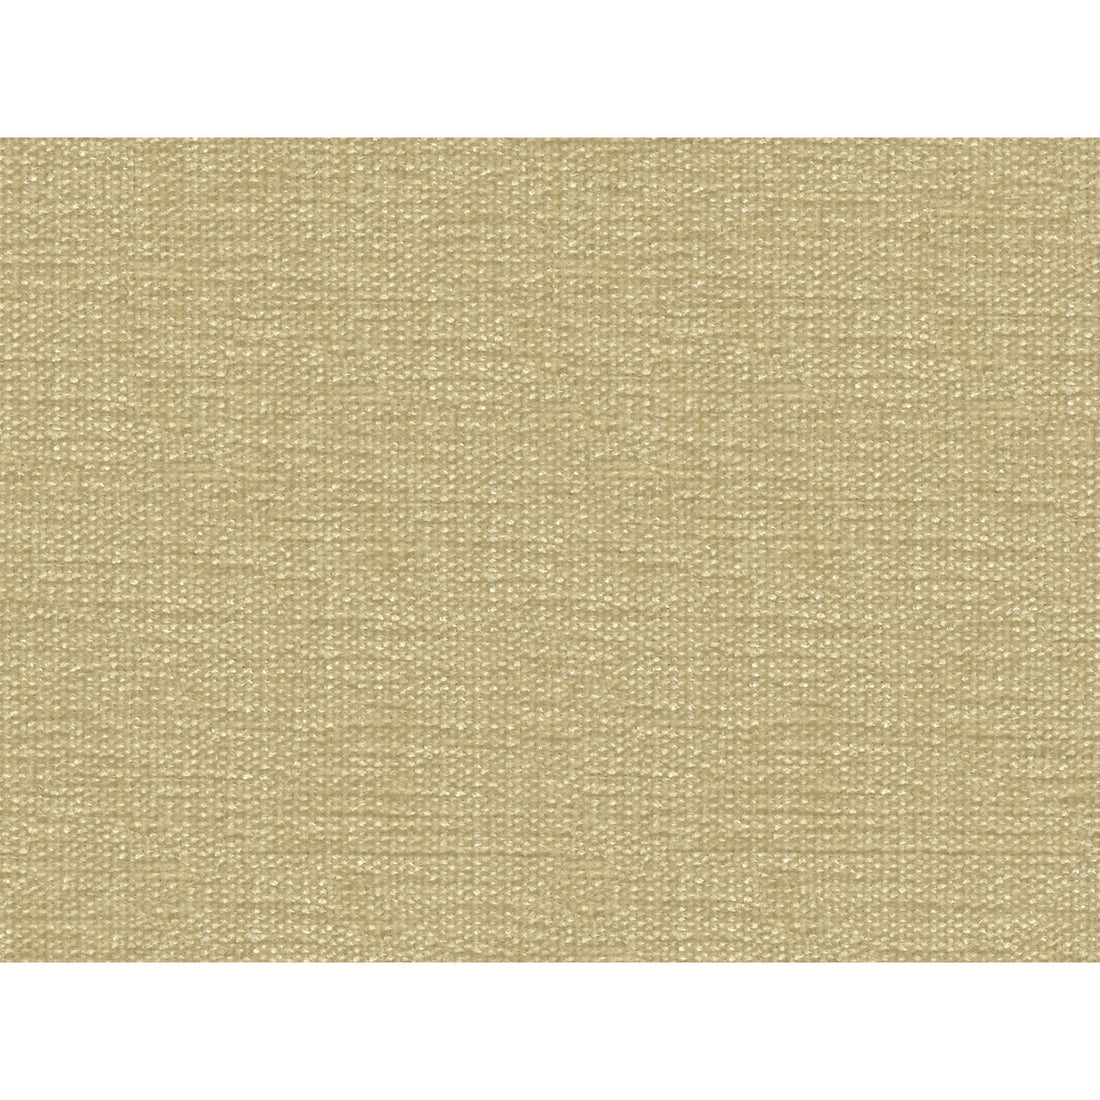 Kravet Smart fabric in 34959-1 color - pattern 34959.1.0 - by Kravet Smart in the Performance Kravetarmor collection